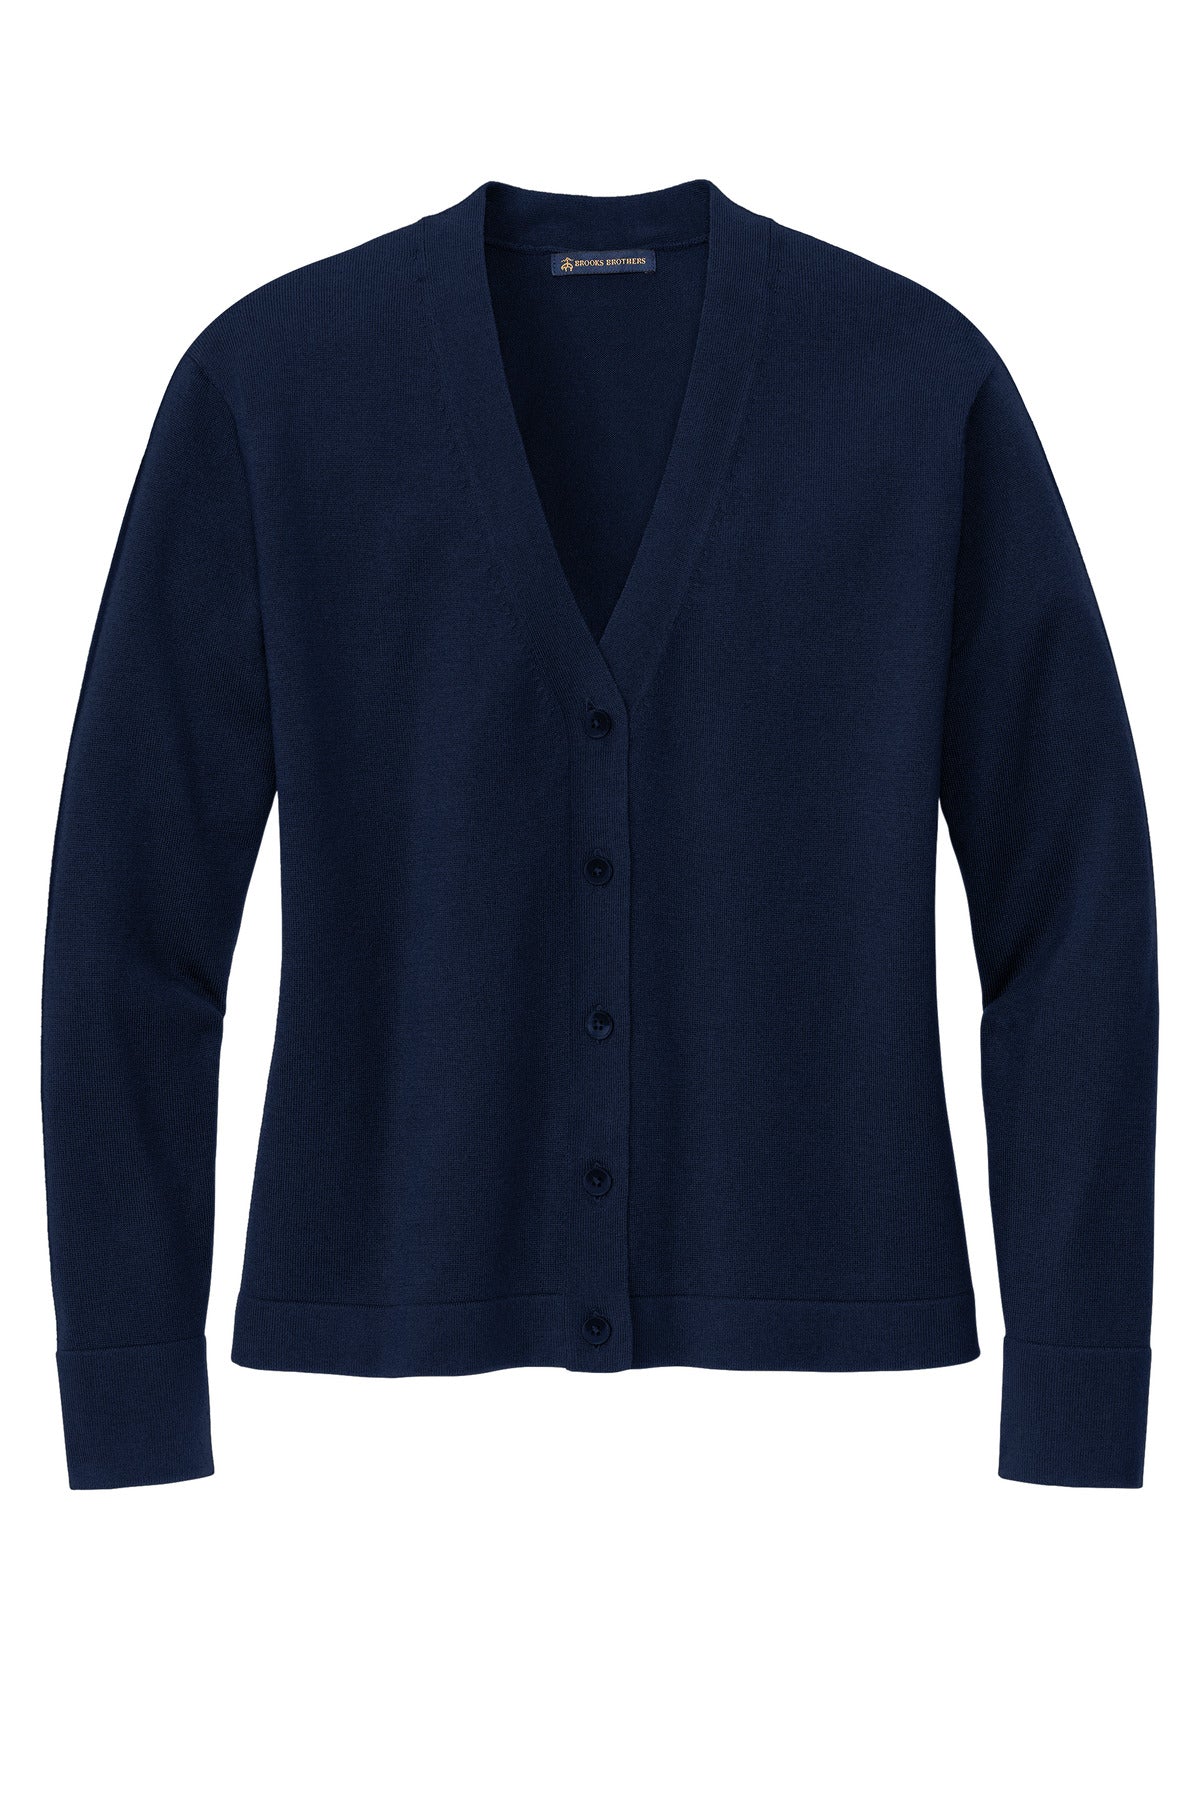 Brooks Brothers® Women's Cotton Stretch Cardigan Sweater BB18405